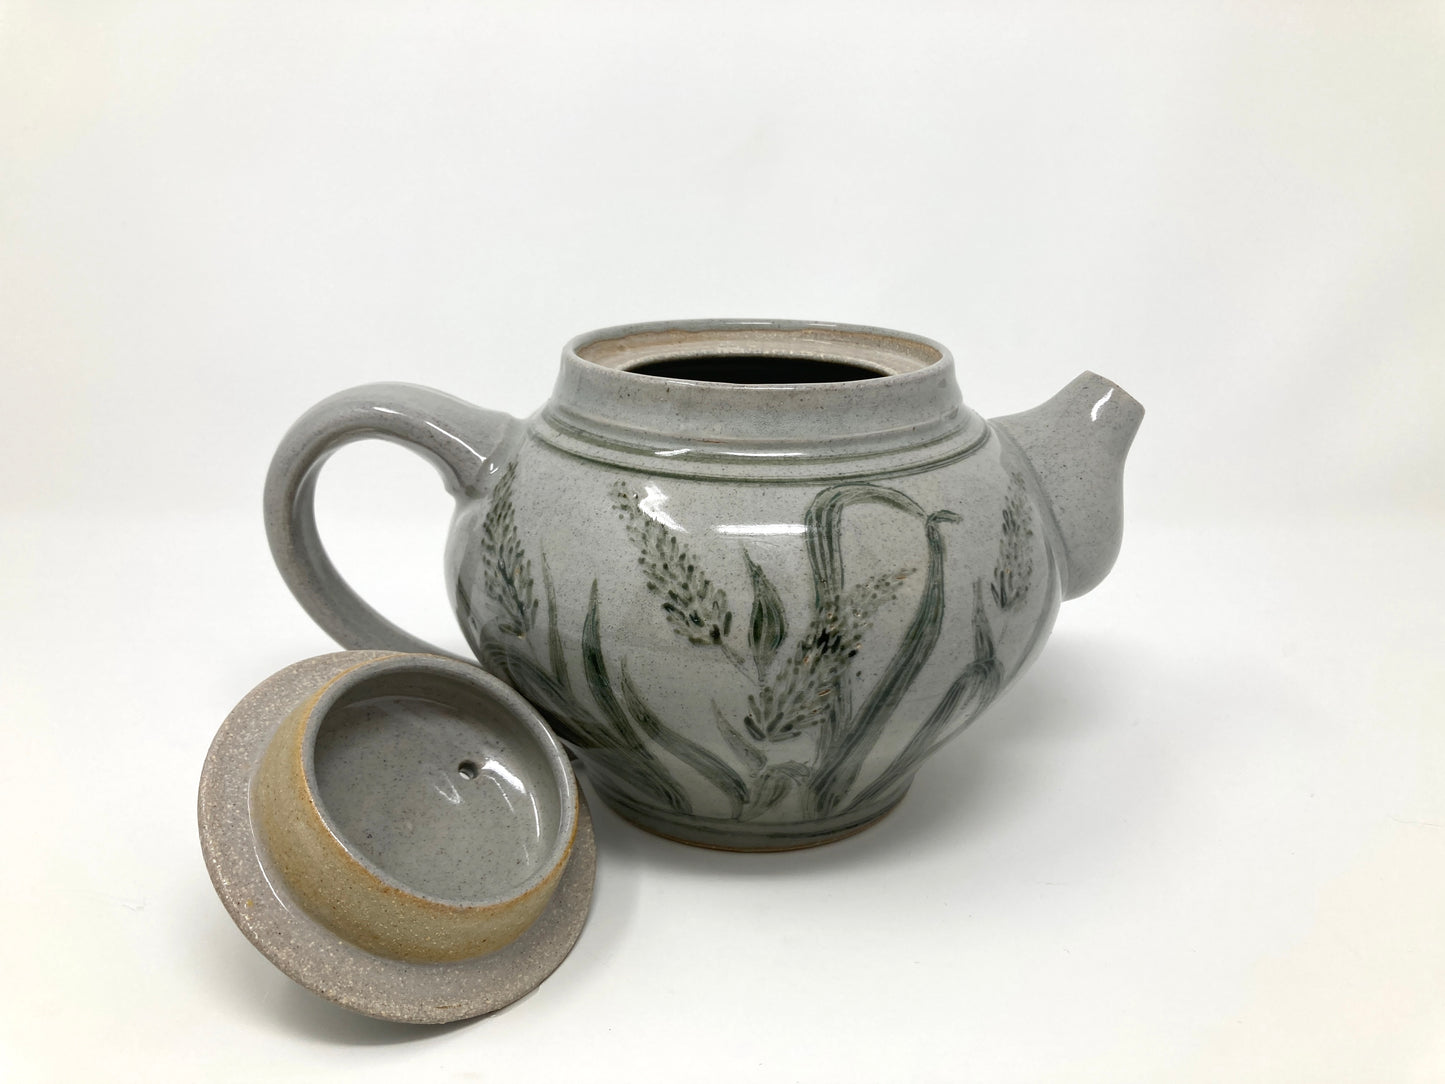 Teapot with Wild Grass